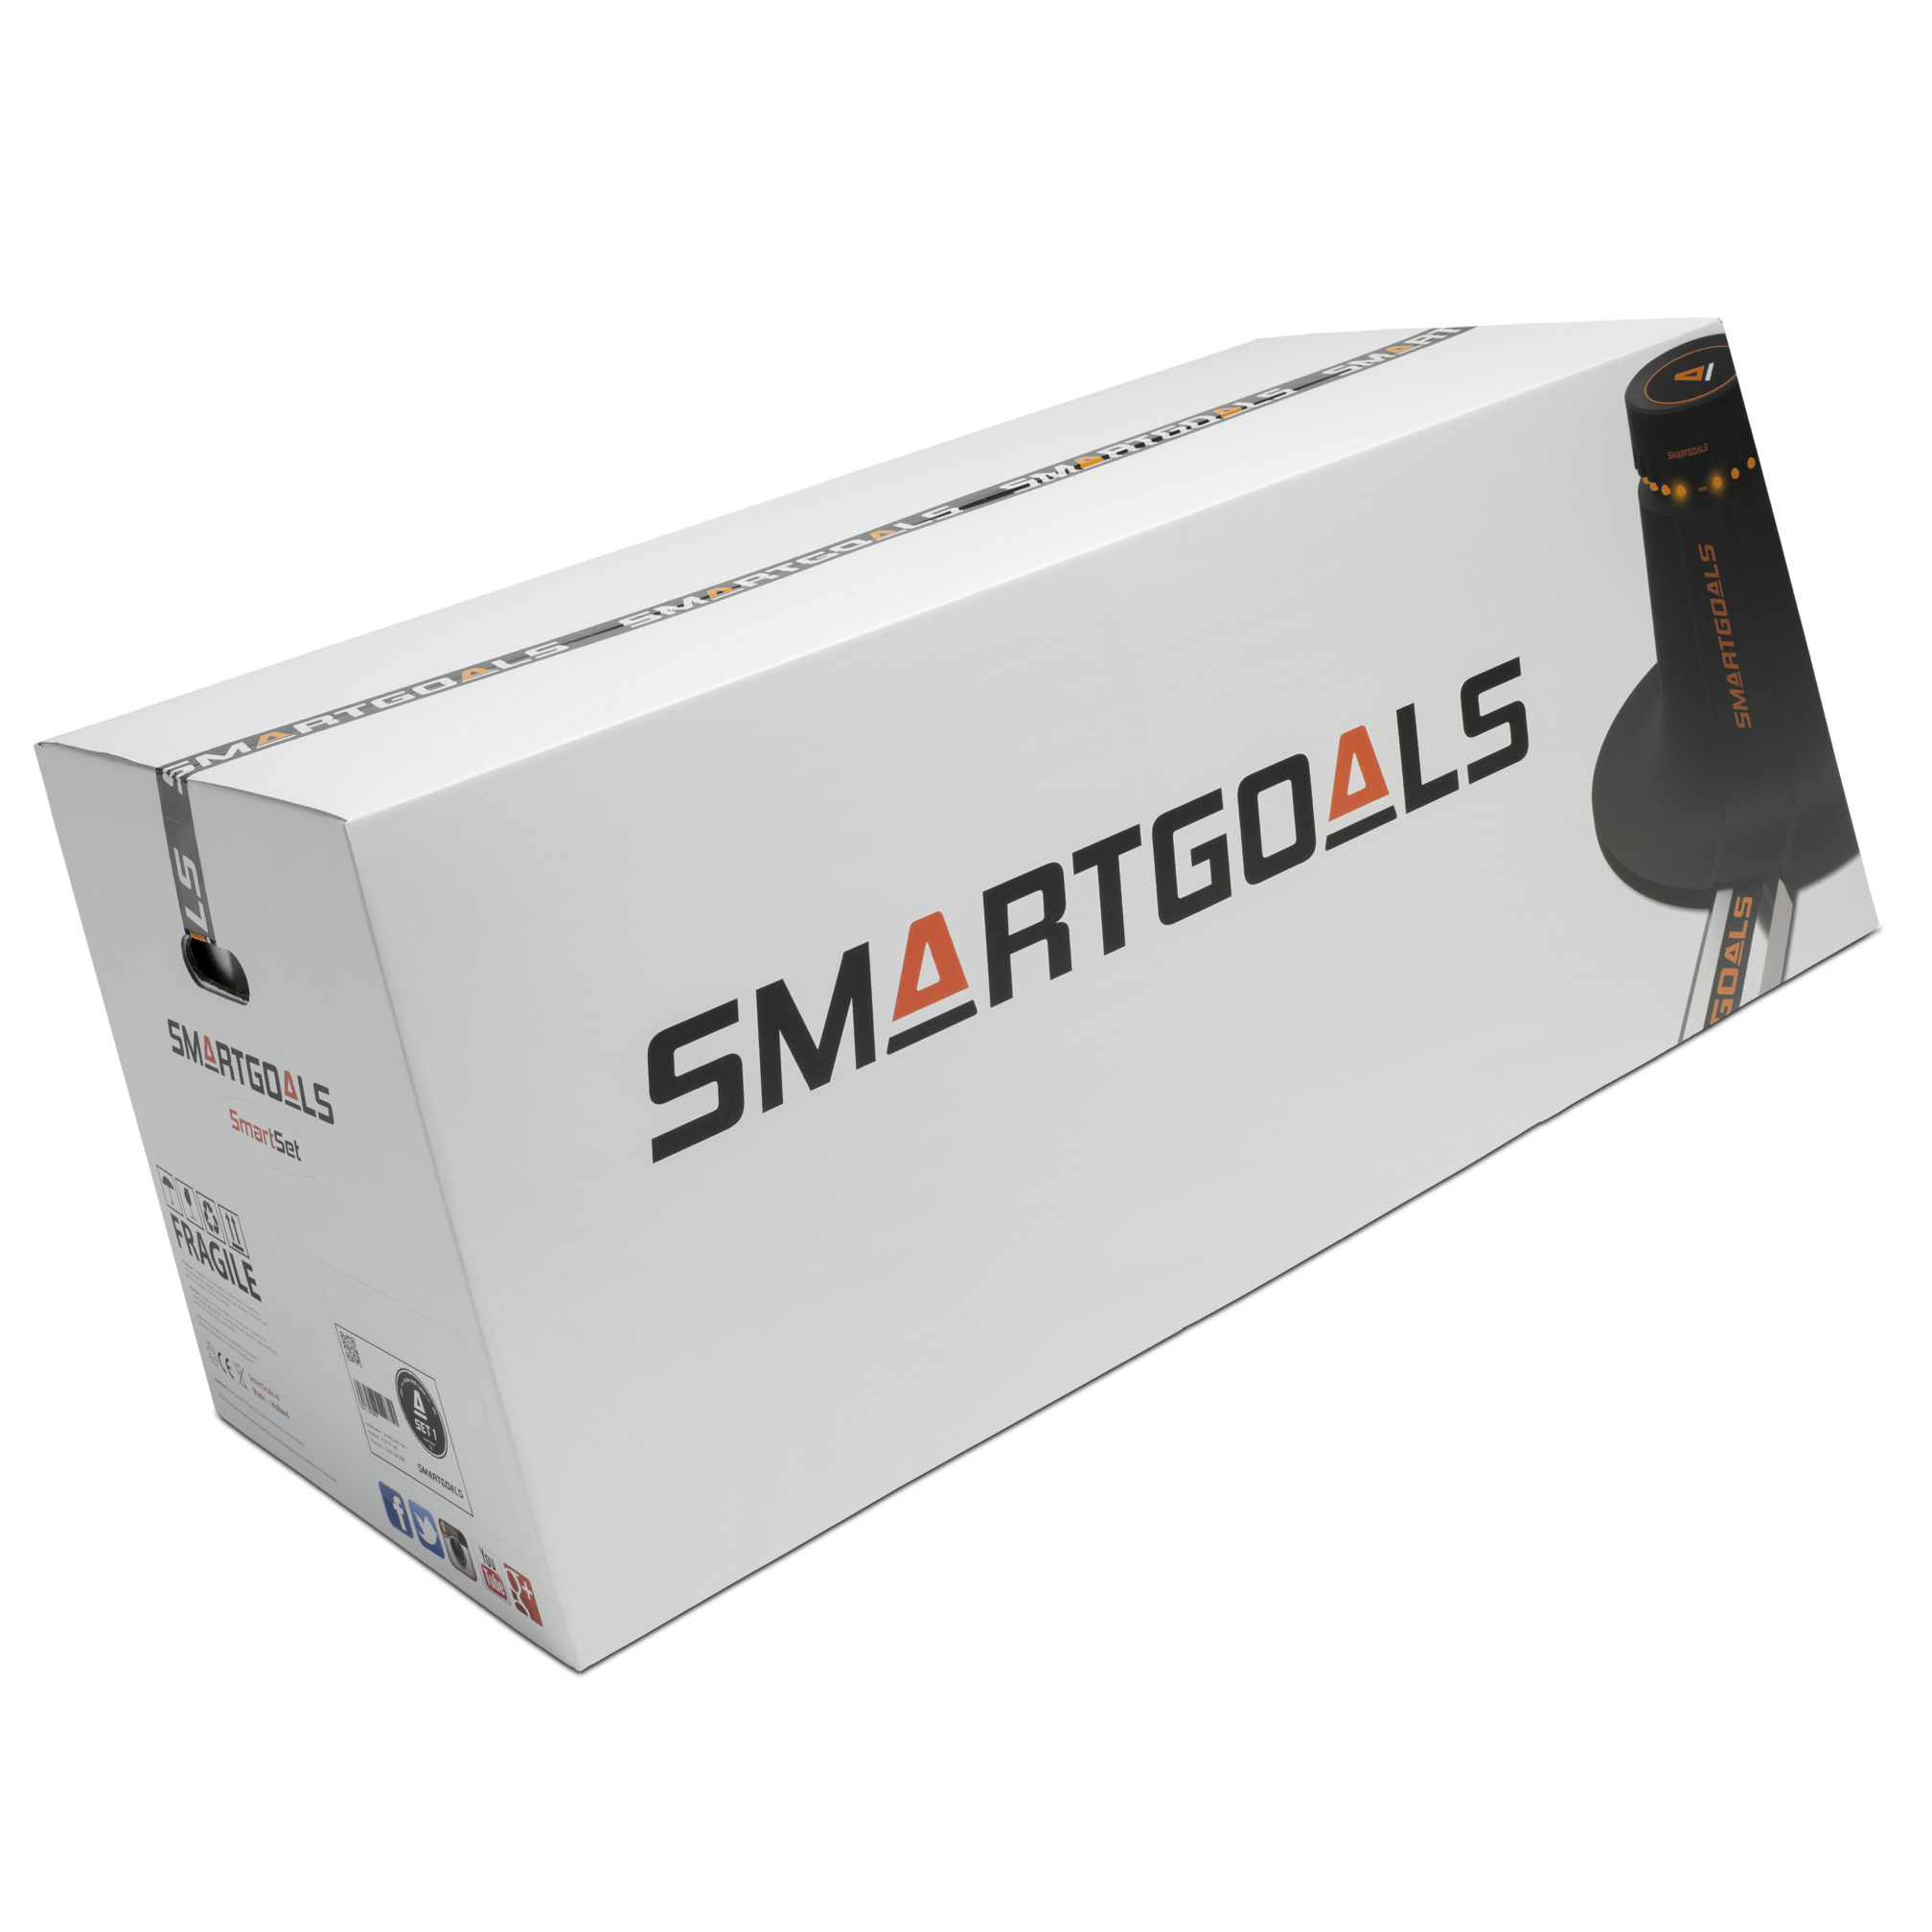 SmartGoals Schoolset Premium 2